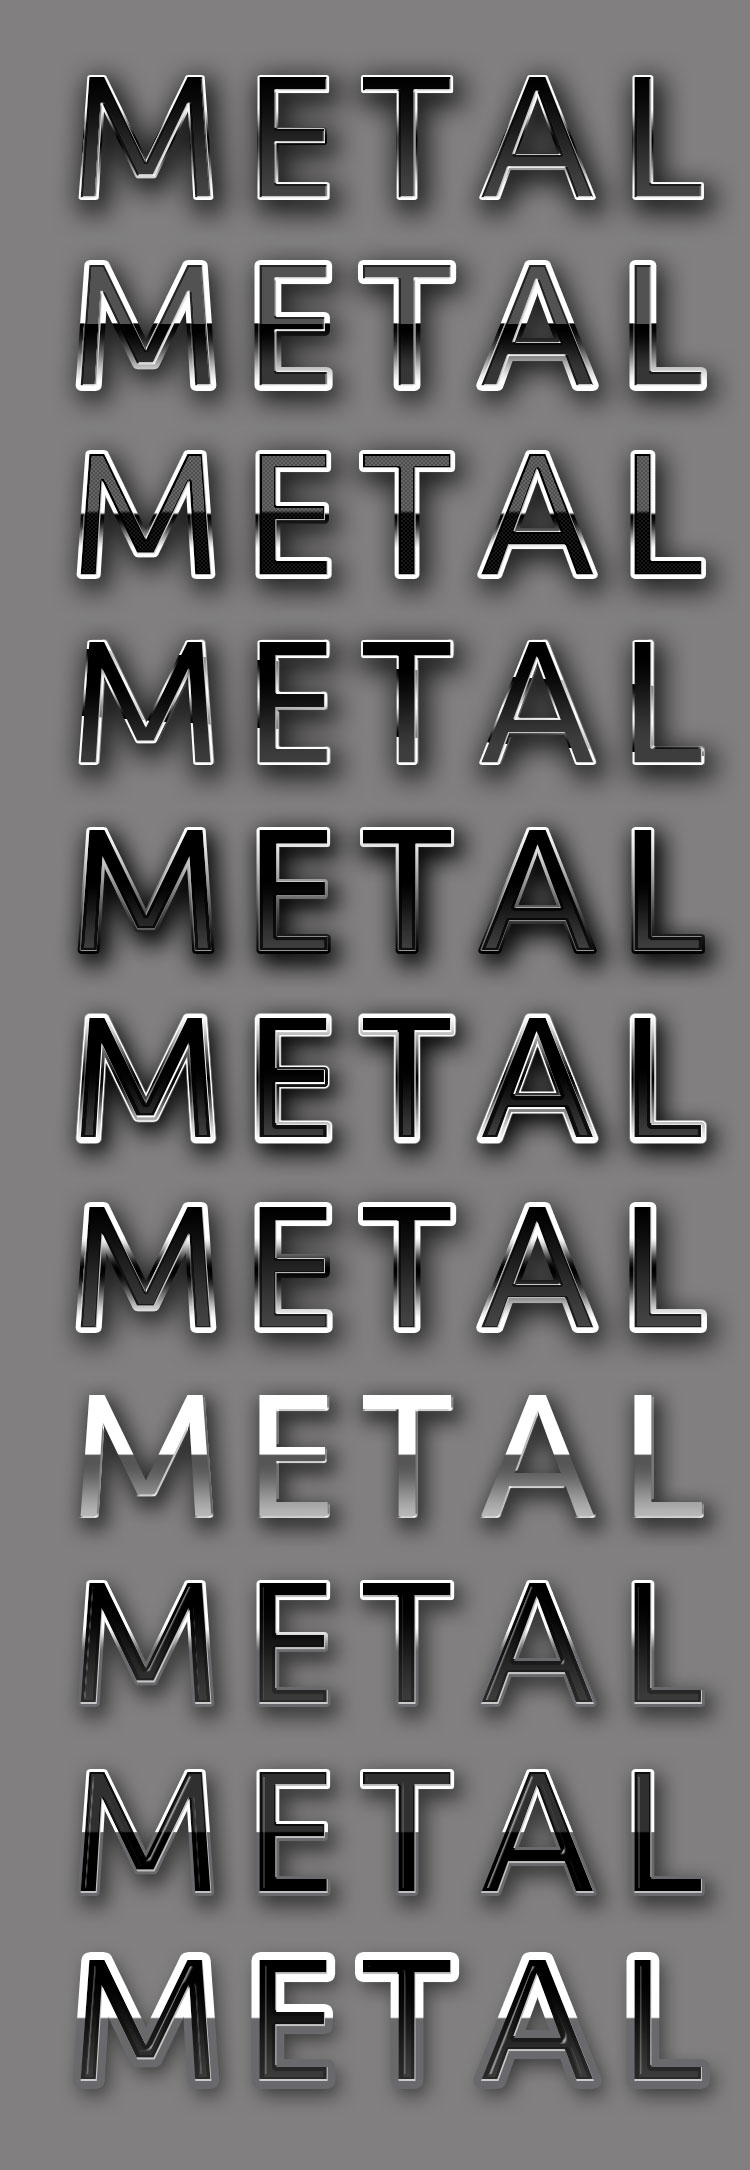 Metallo PS Photoshop Font Style